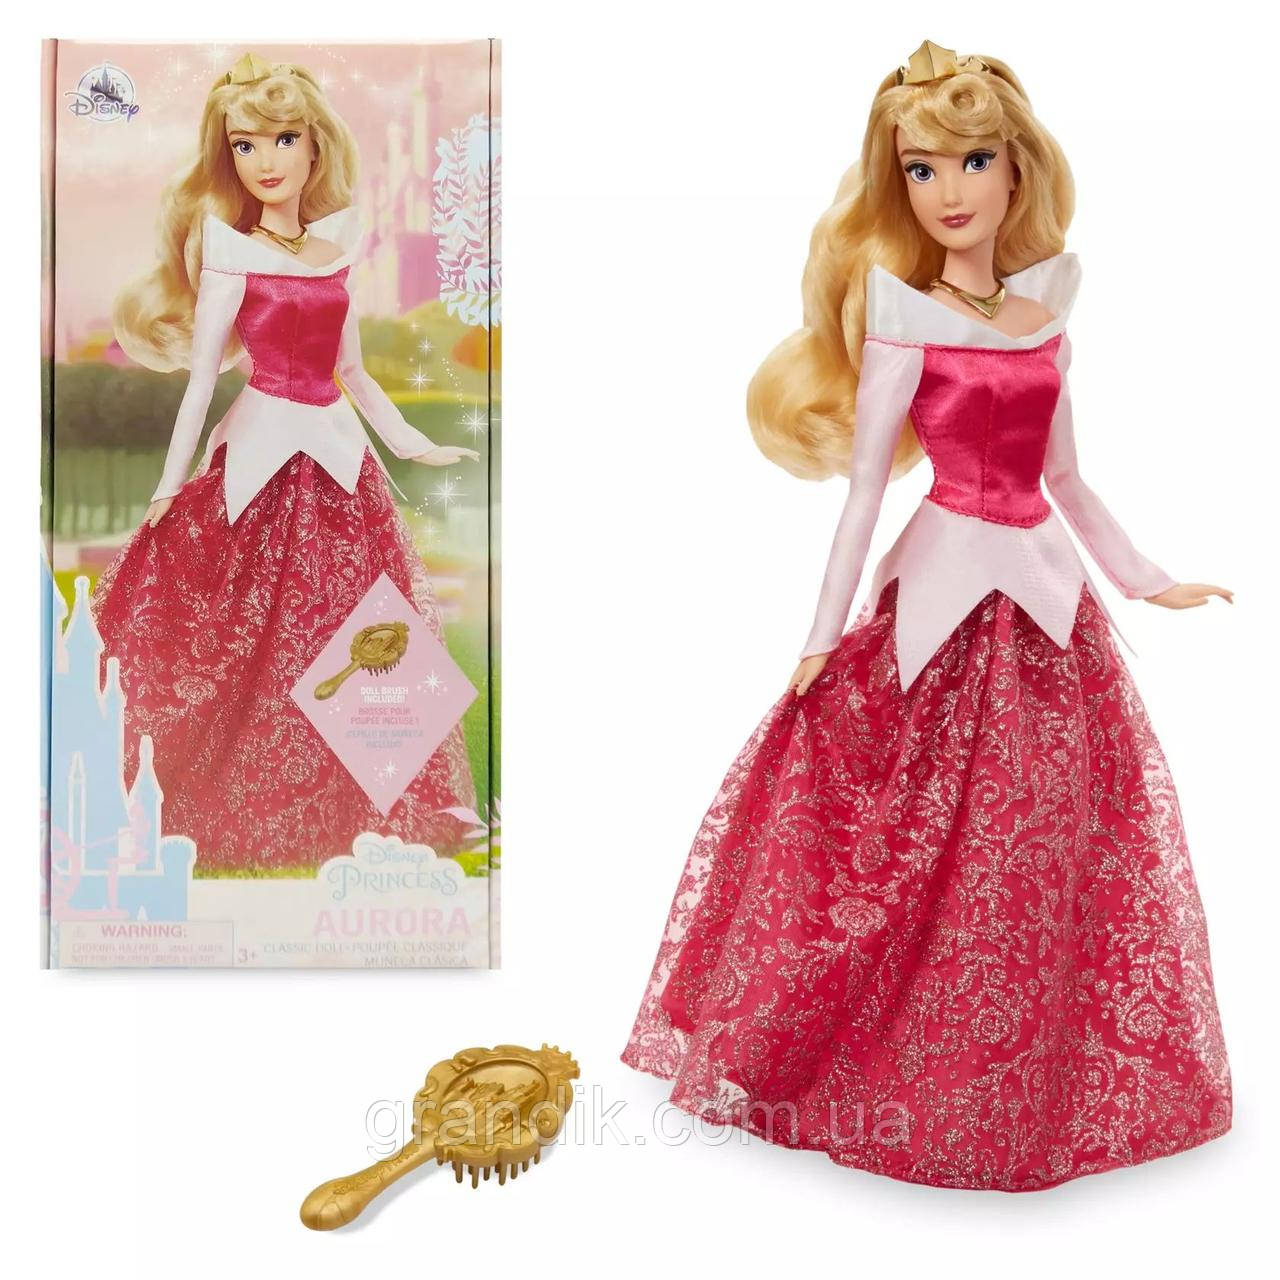 Класична лялька Аврора, принцеса Дісней, оригінал, Aurora Classic Doll – Sleeping Beauty